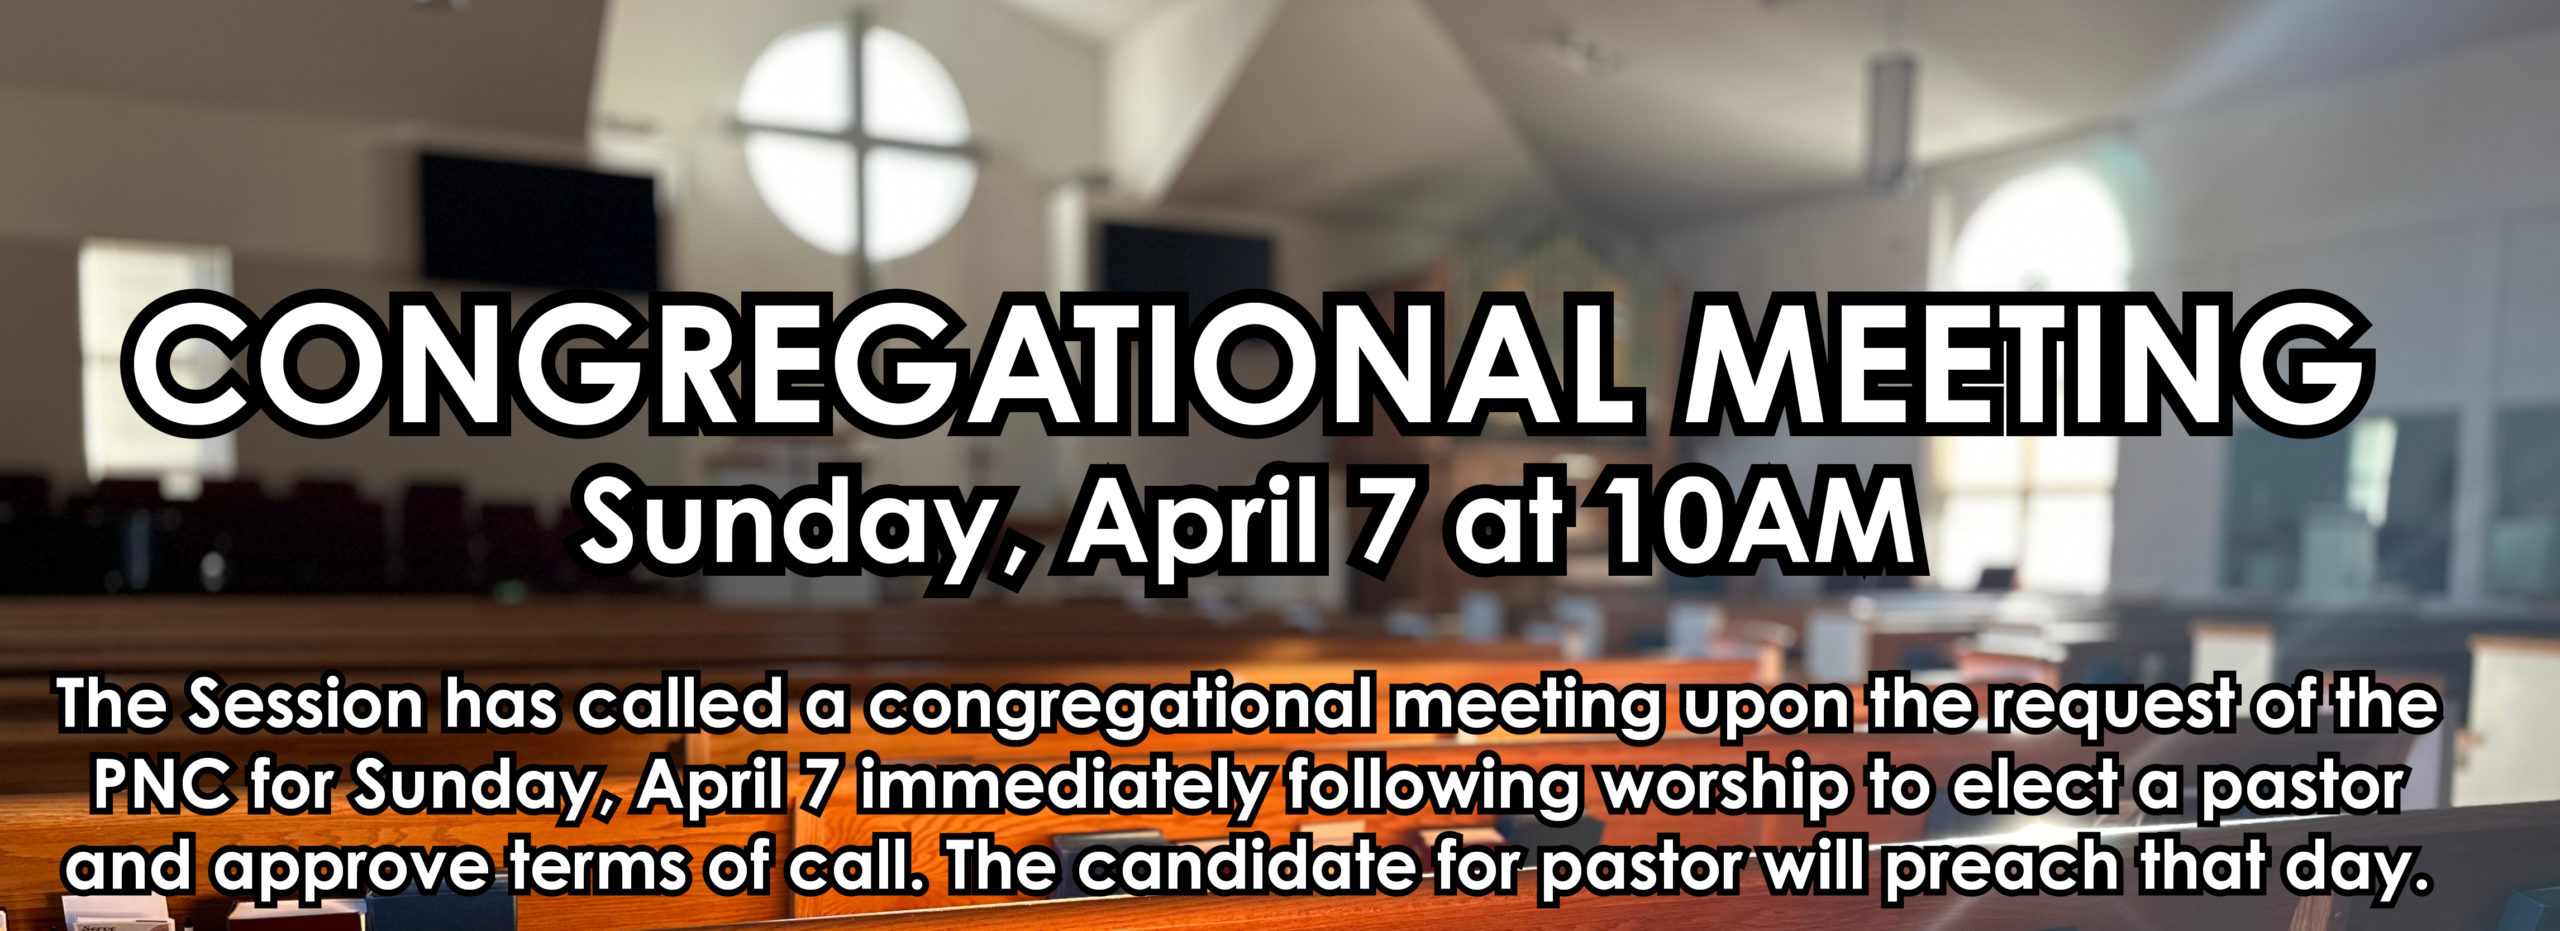 Congregational-Meeting-banner-1